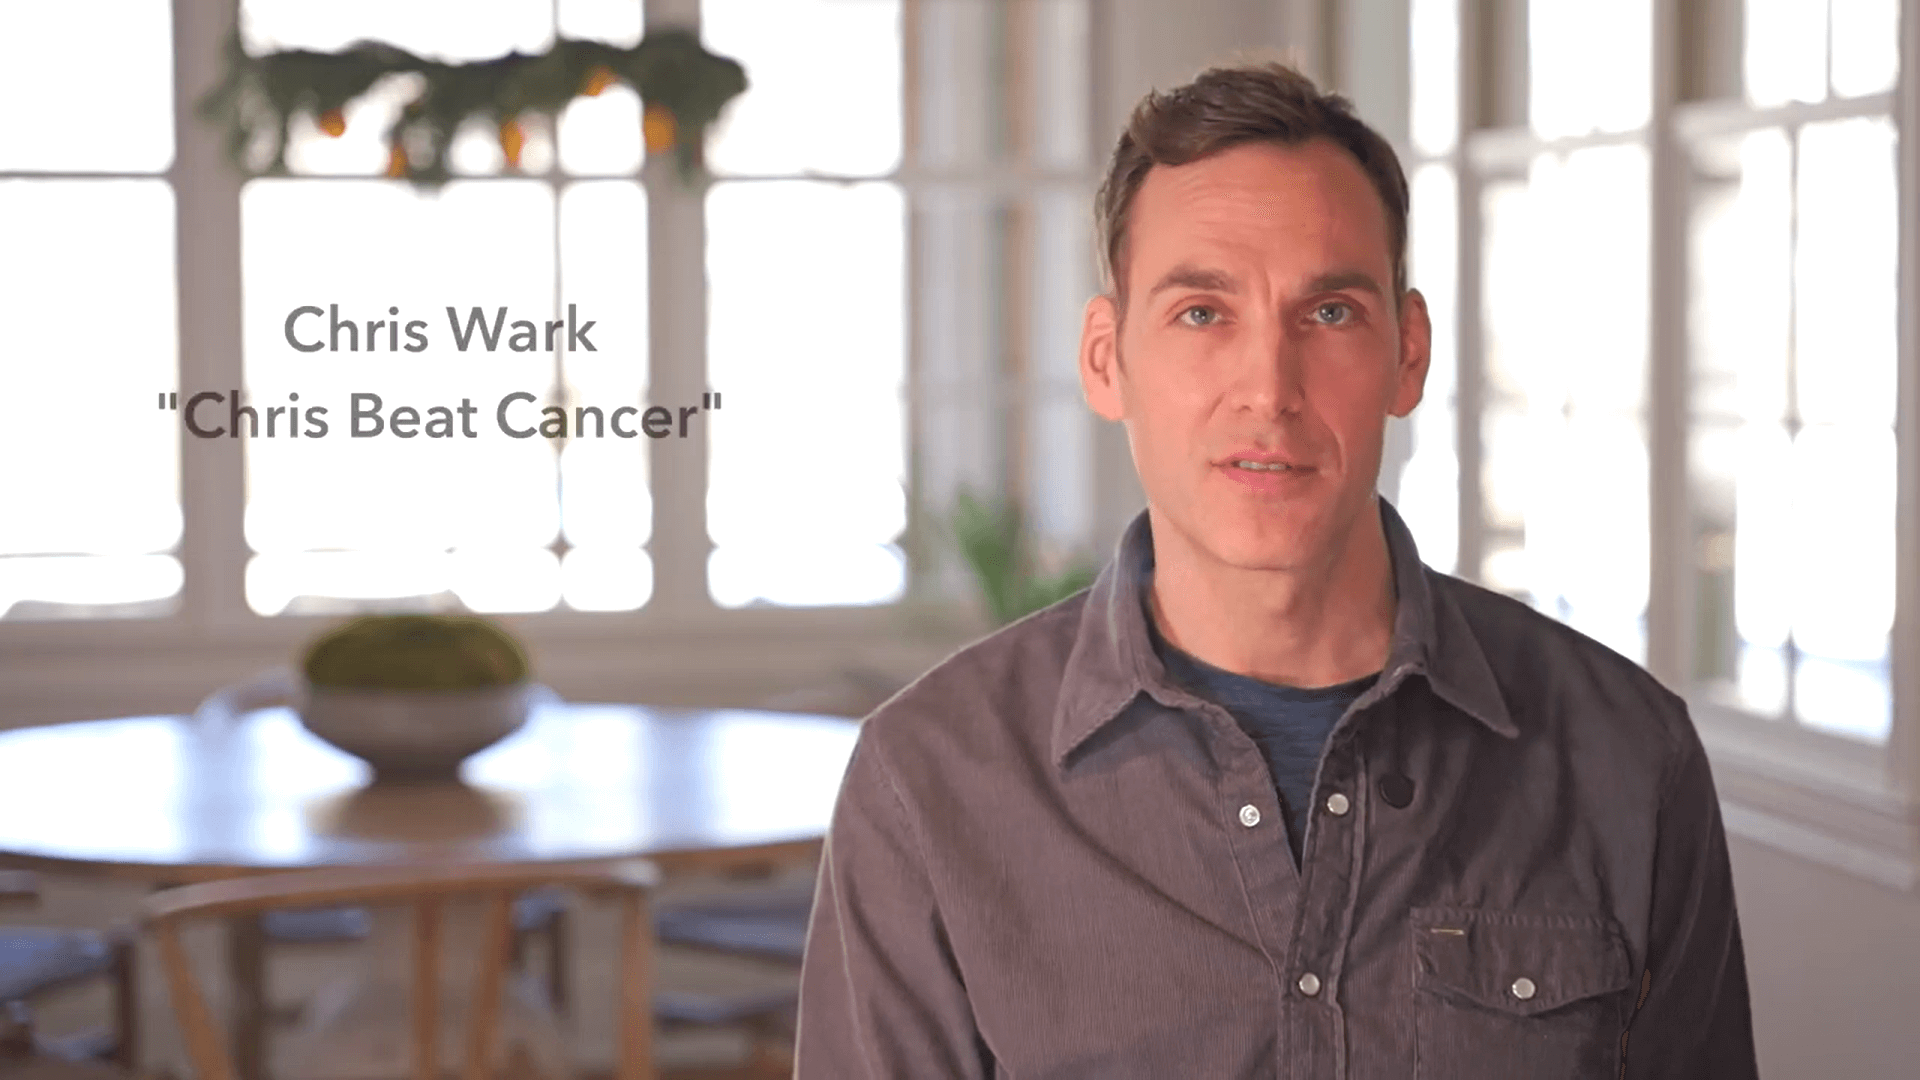 Chris Wark - Chris Beats Cancer's Story